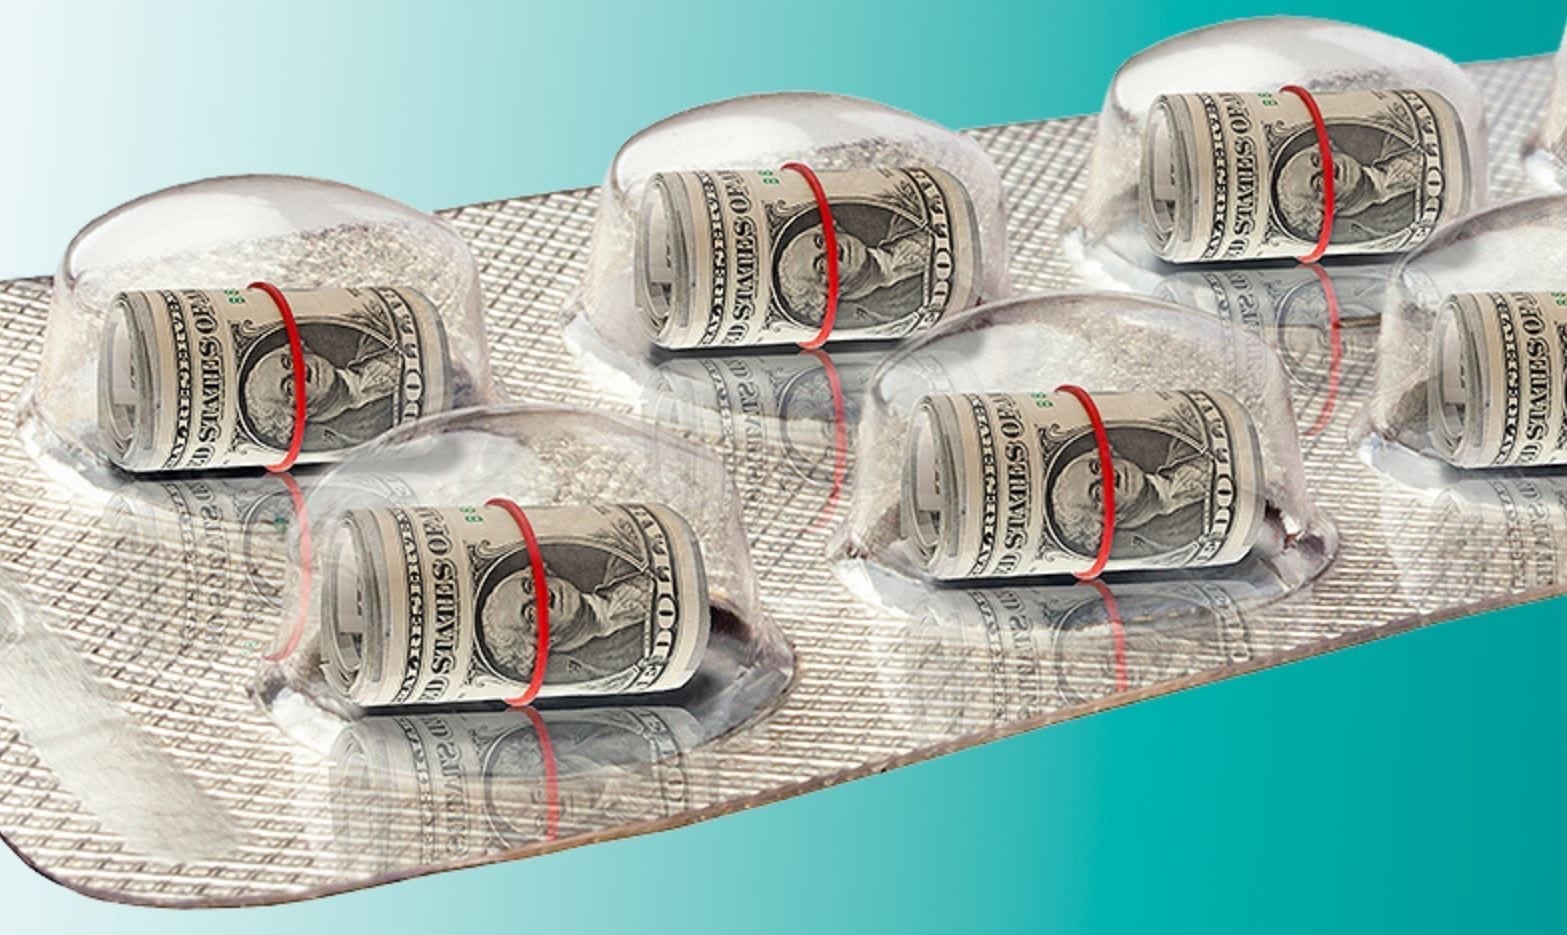 Blister pack of dollars instead of medicine; image courtesy of www.renegadetribune.com.